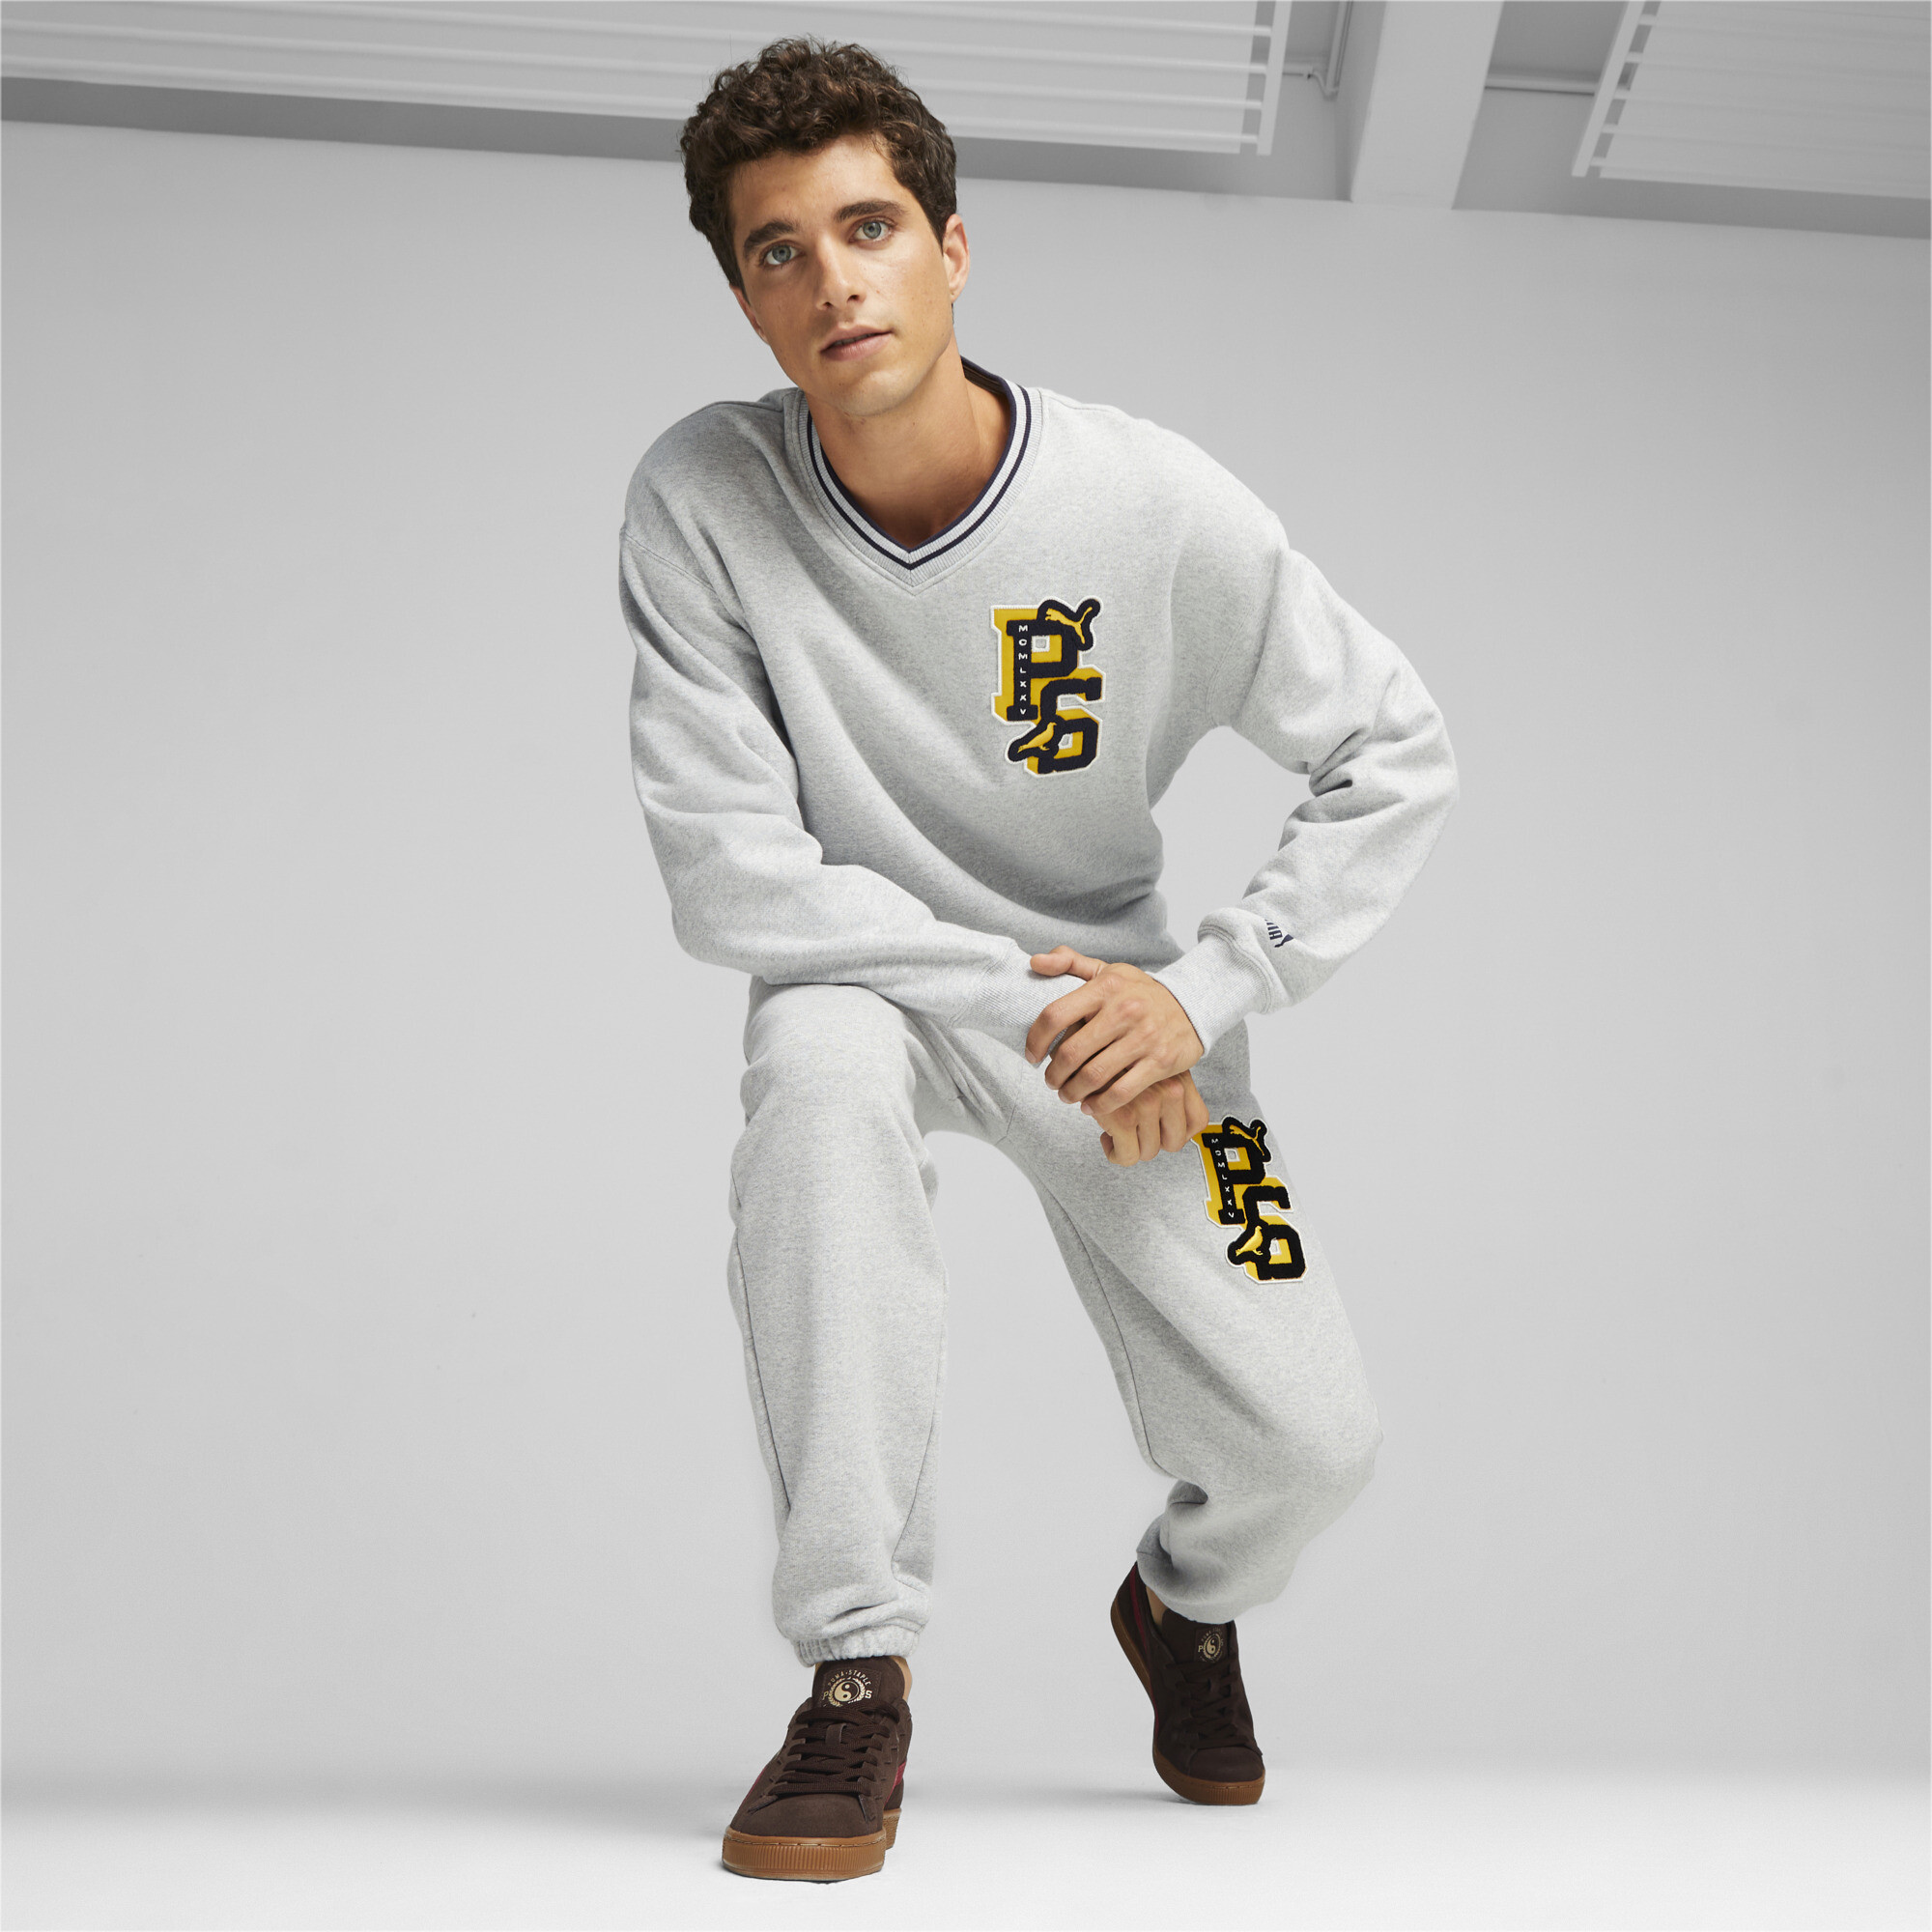 Men's Puma X STAPLE's Sweatpants, Gray, Size M, Clothing